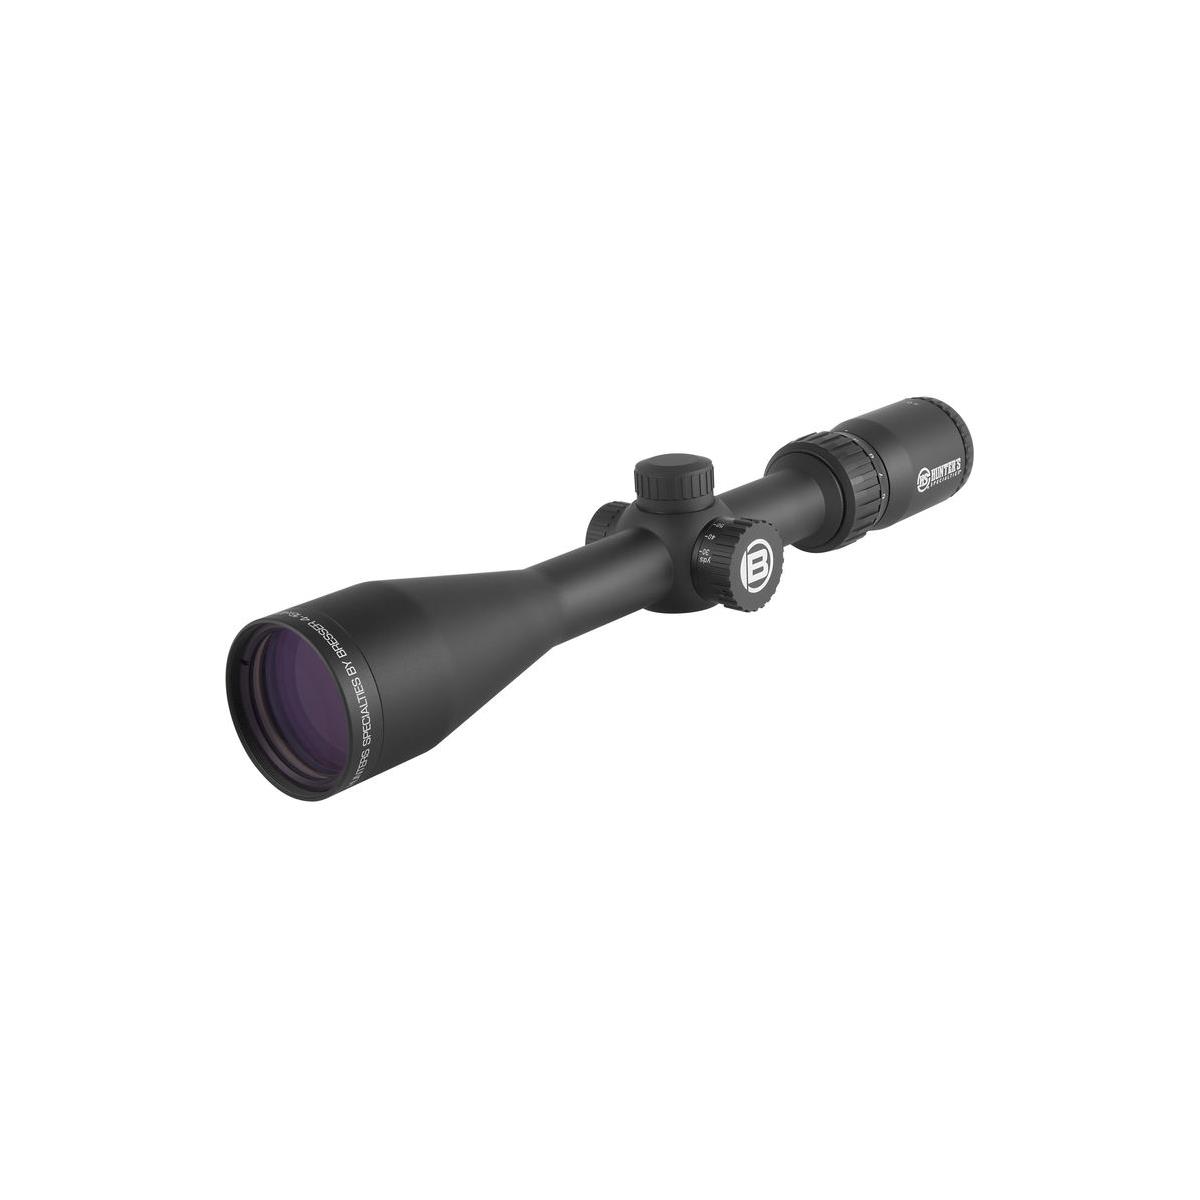 Bresser 4-16x42 Hunter Riflescope, Spec. Purpose Reticle, Side Parallax, 1" Tube -  HS-41642